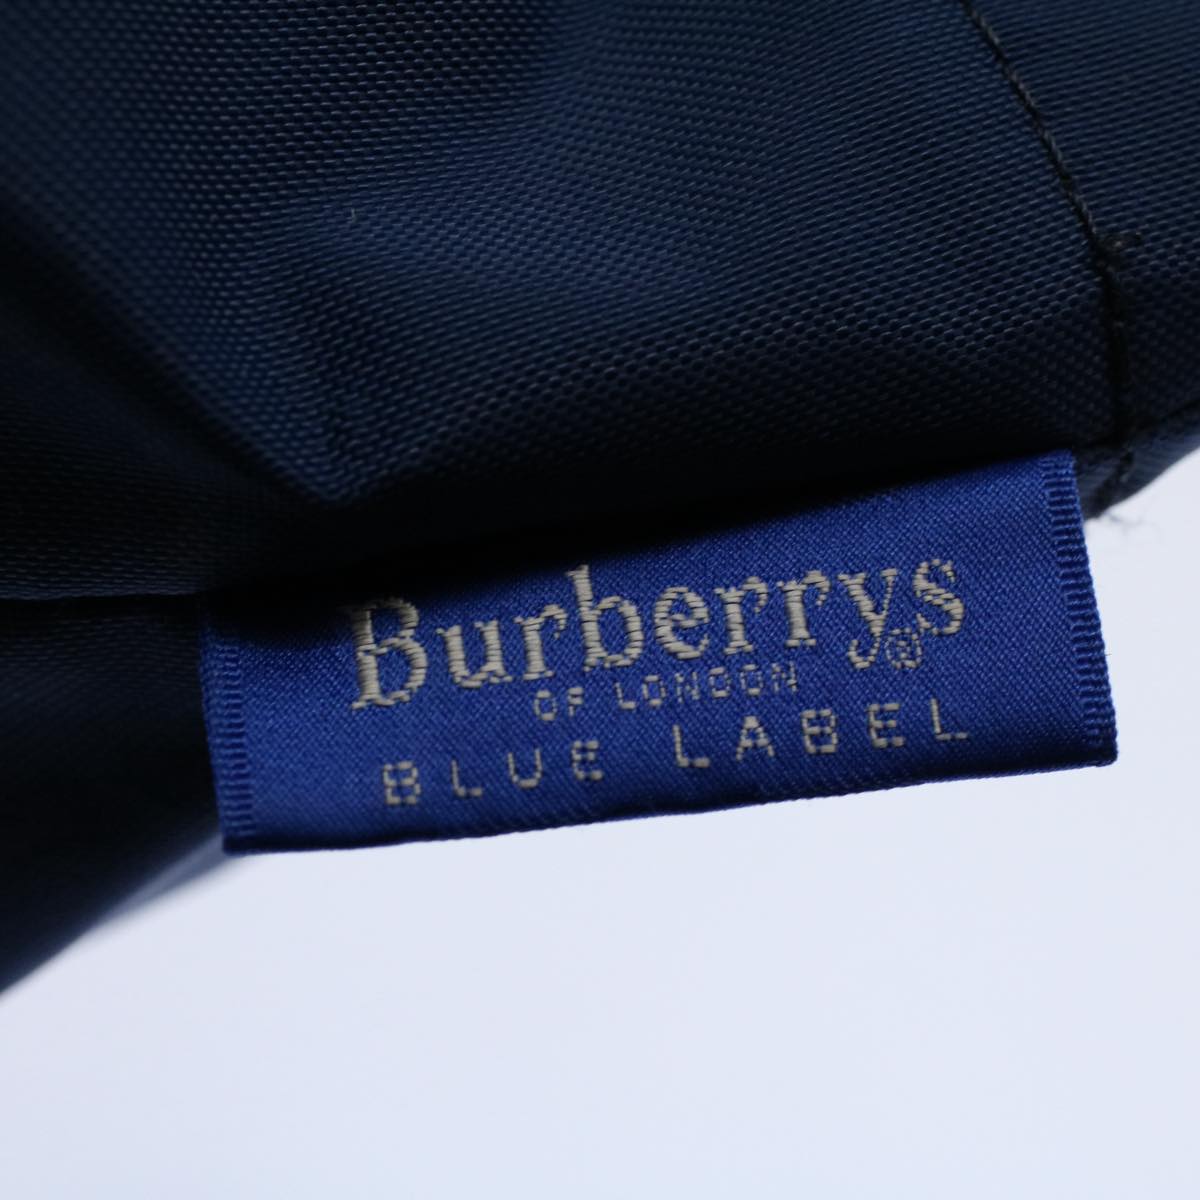 Burberrys Blue Label Tote Bag Nylon Navy Auth yb434